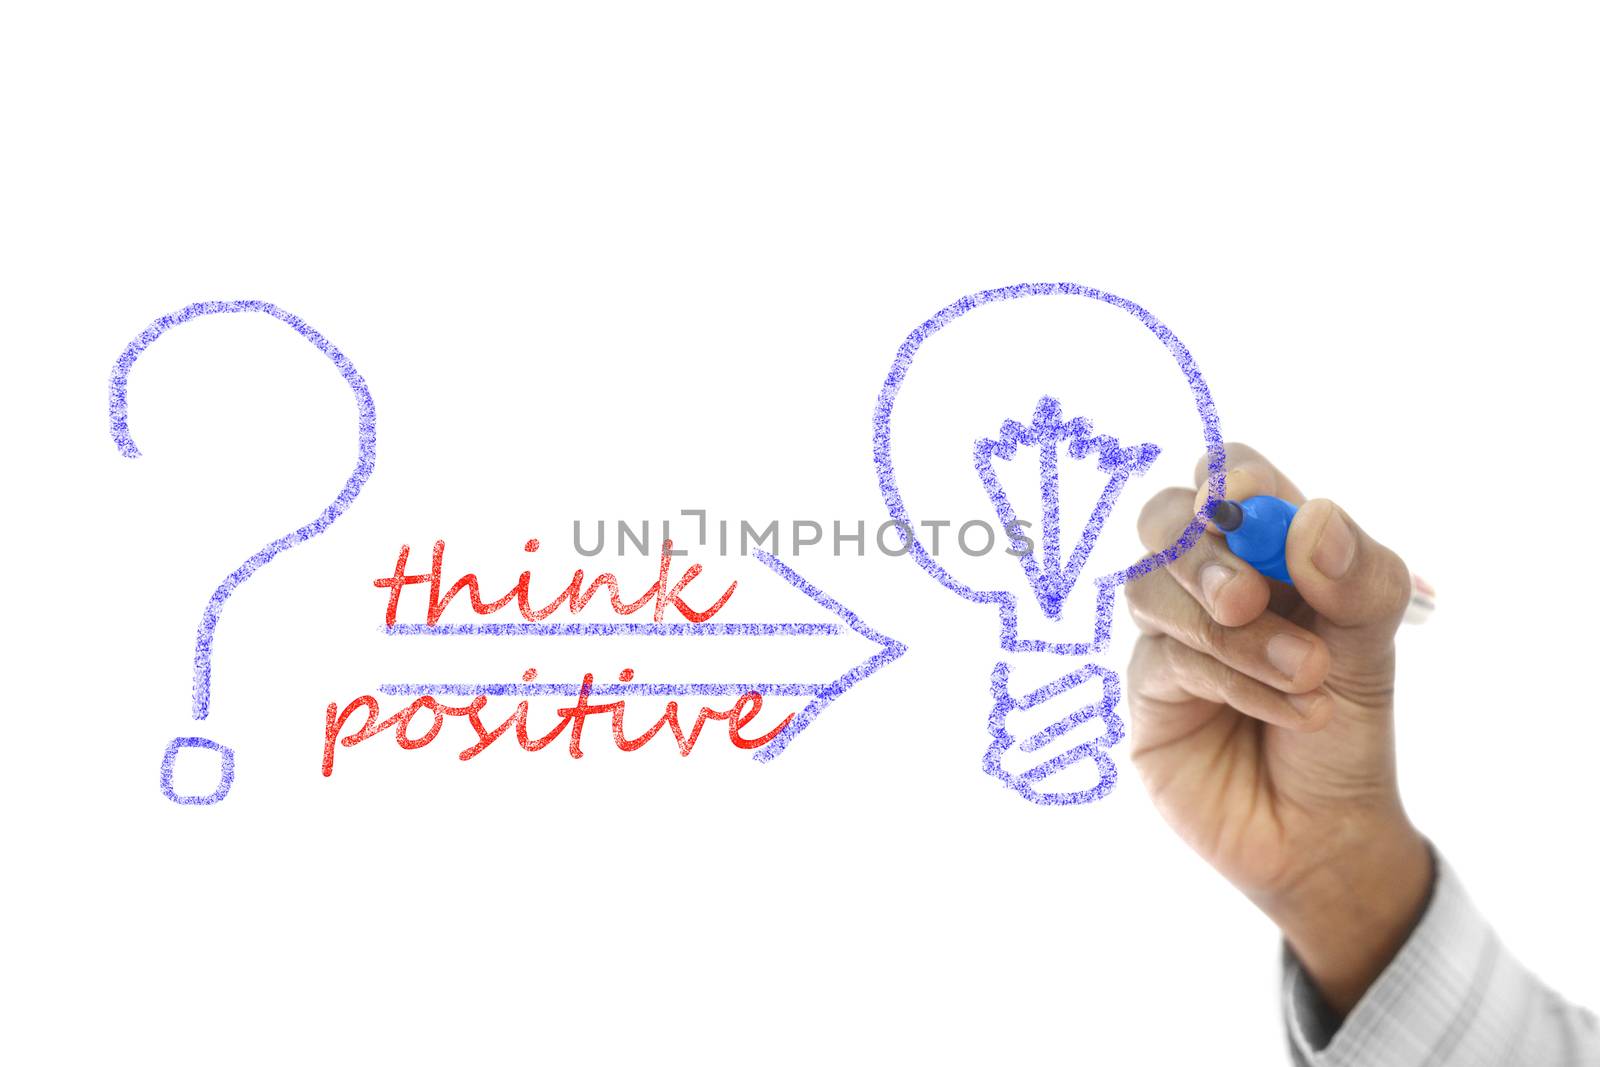 Think Positive written  on transparent wipe board